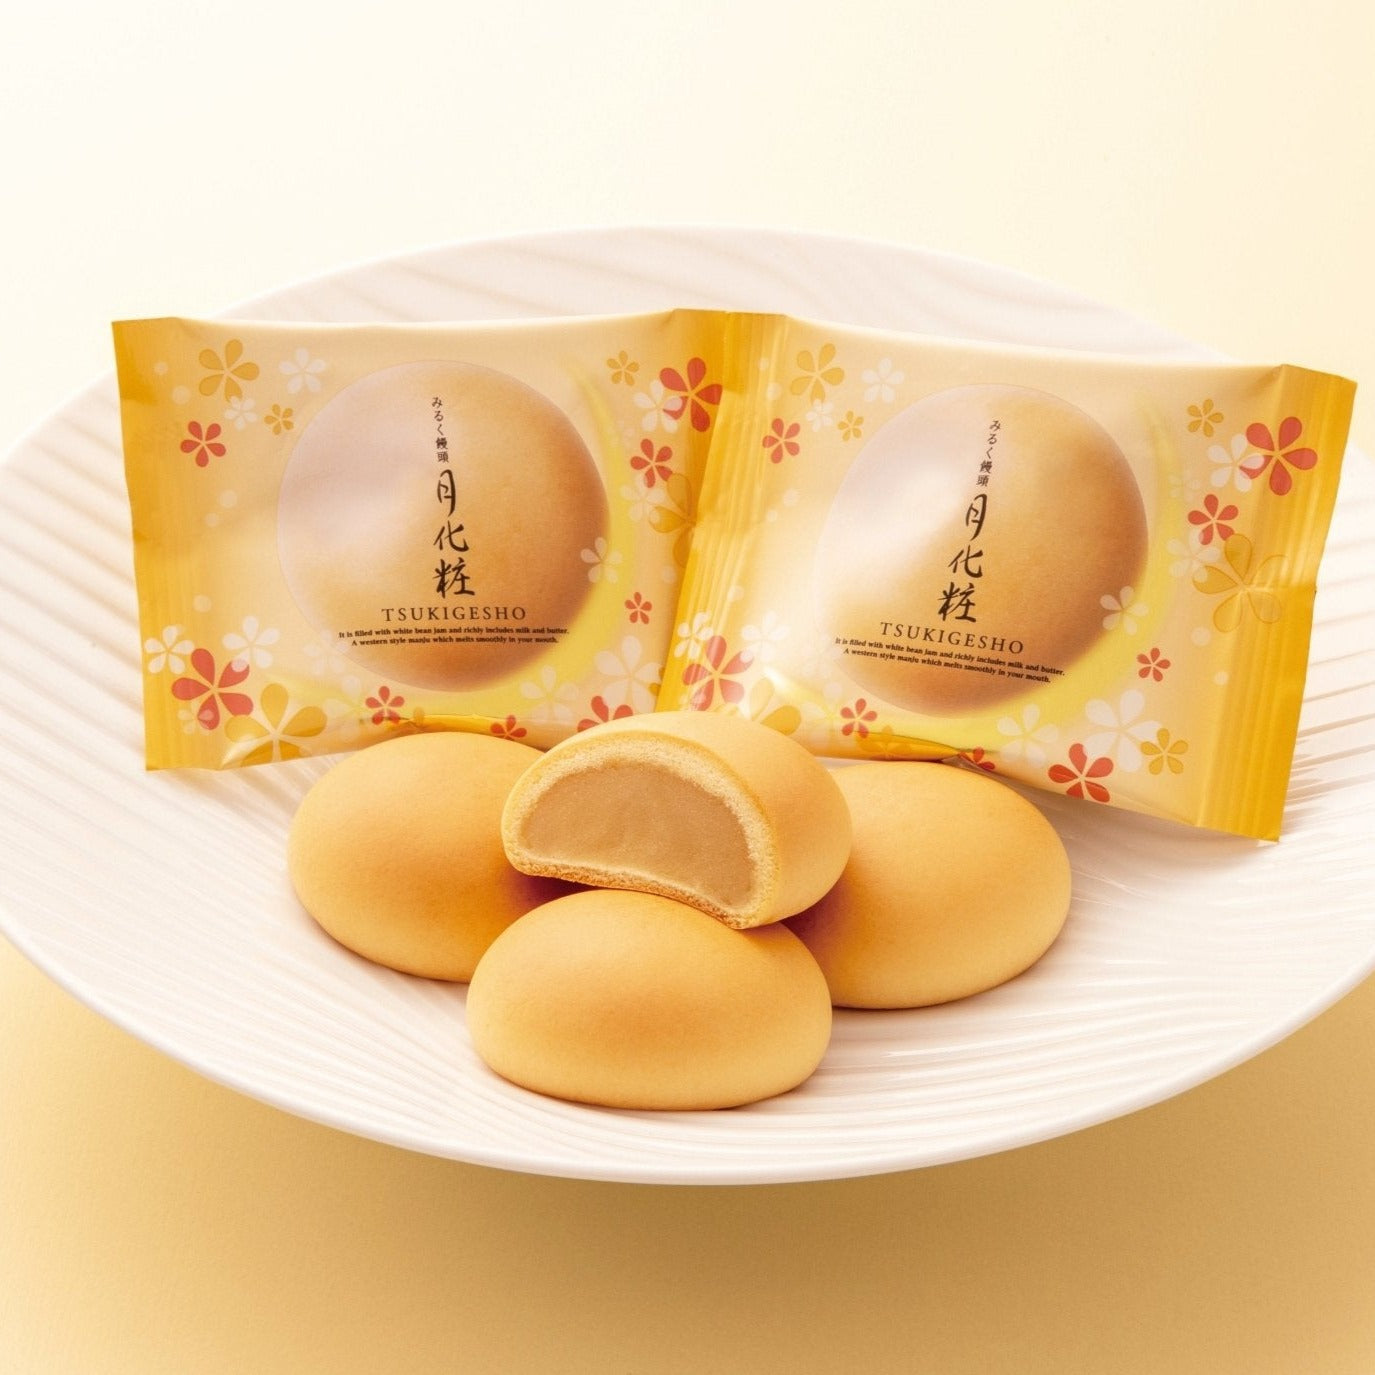 Shofuan AOKI Milk Manju Bun TSUKI GESHO 10pcs - Tokyo Fresh Direct